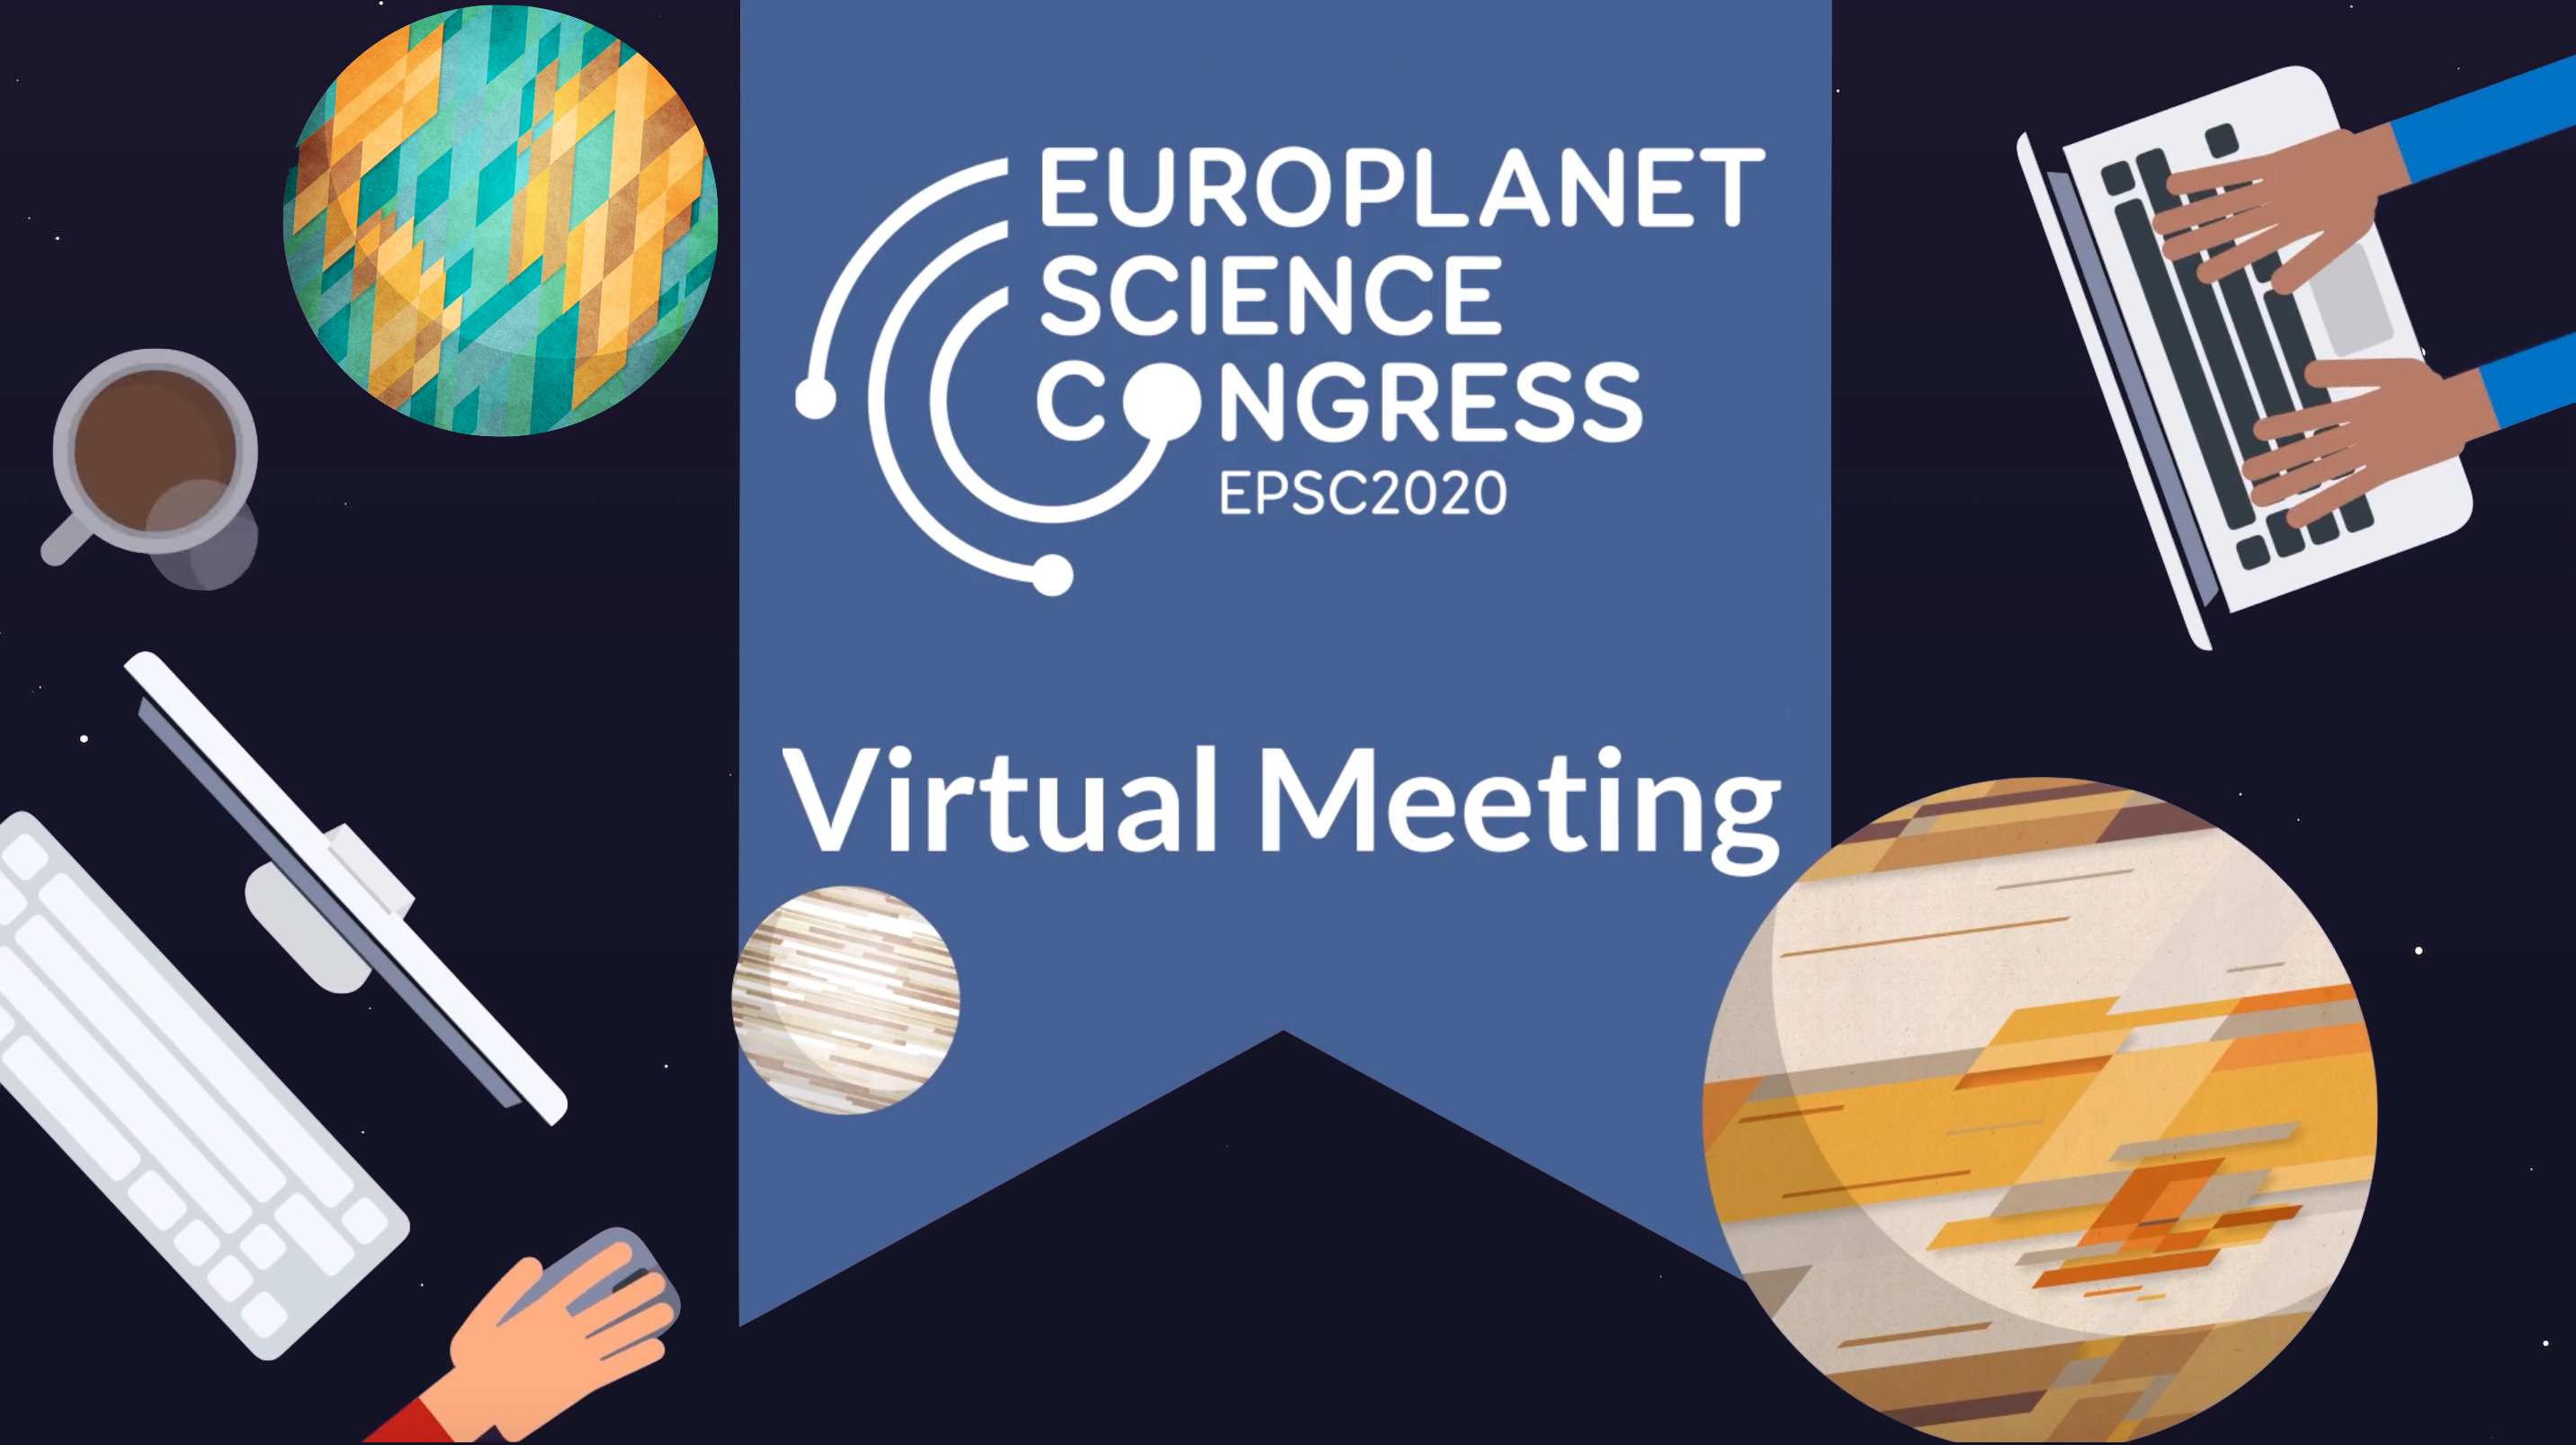 Europlanet Society Congress (EPSC) 2020 Virtual Meeting